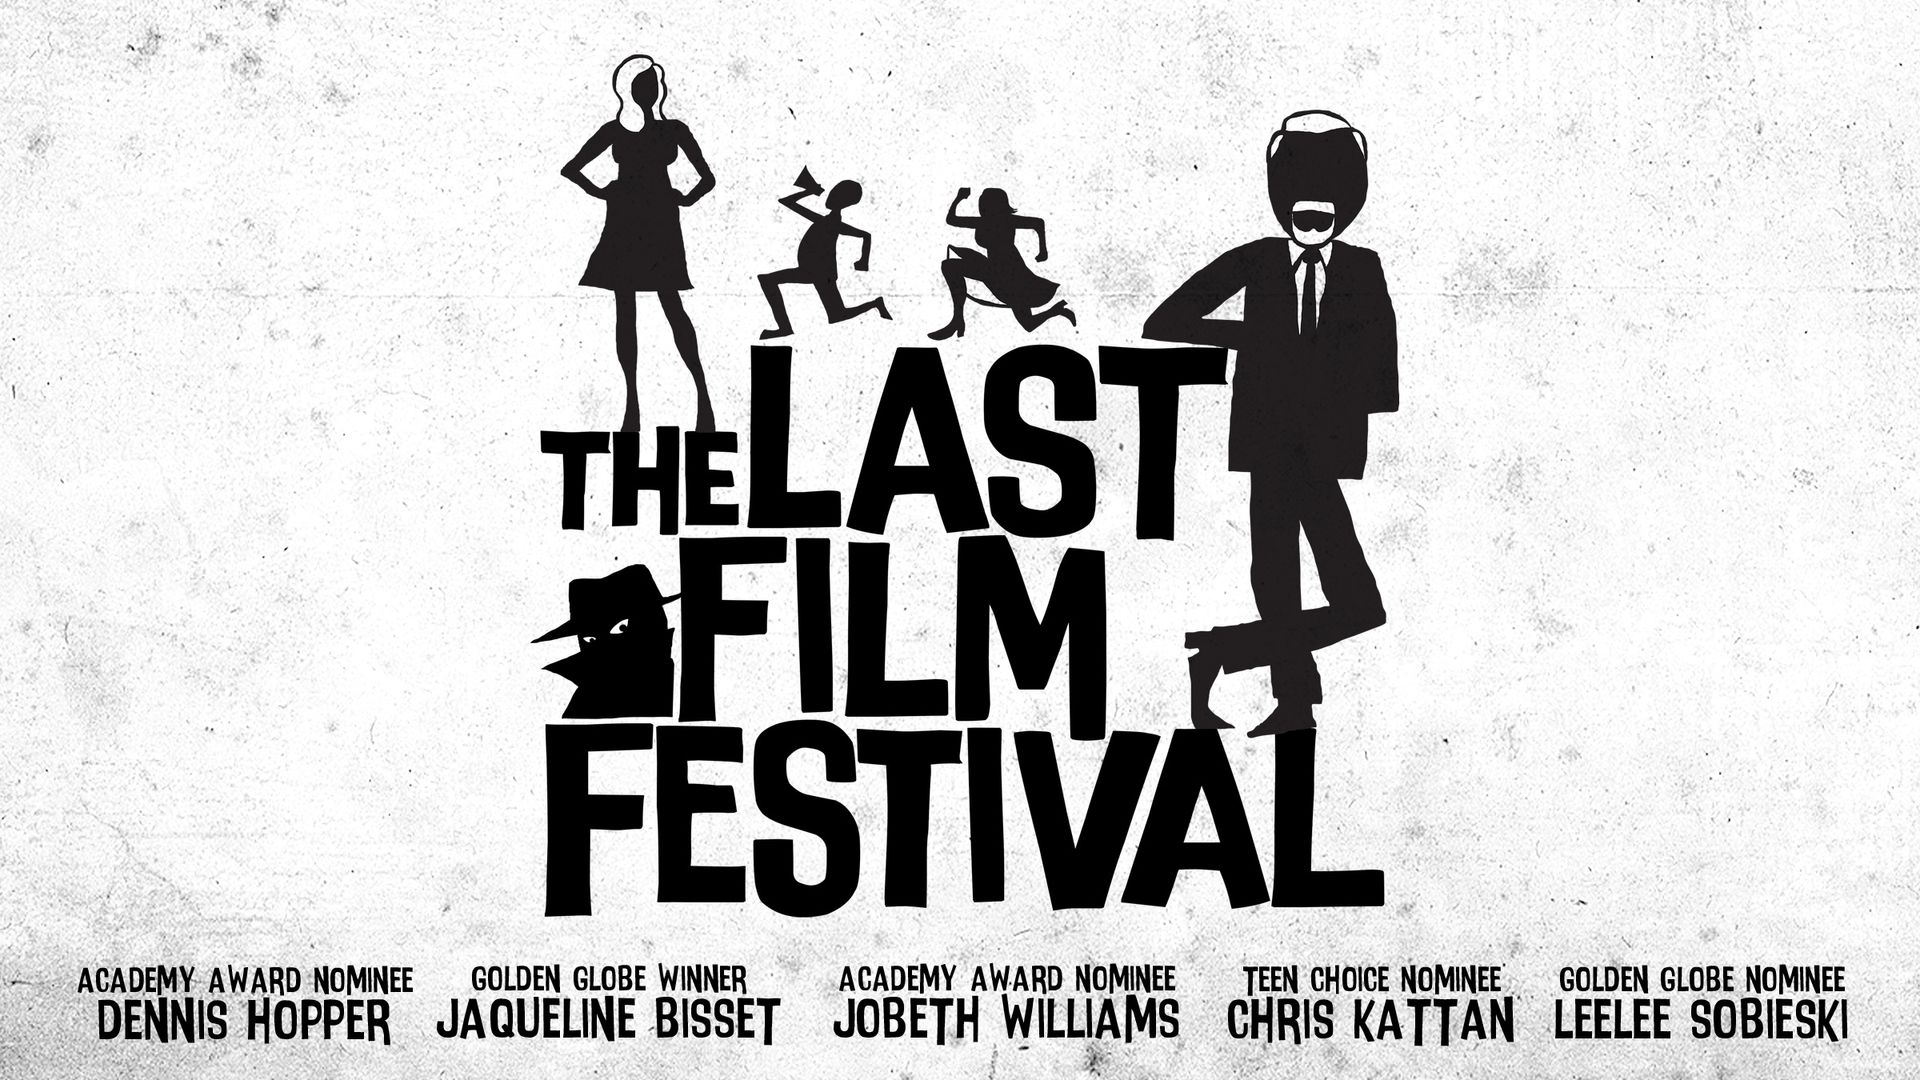 The Last Film Festival Backdrop